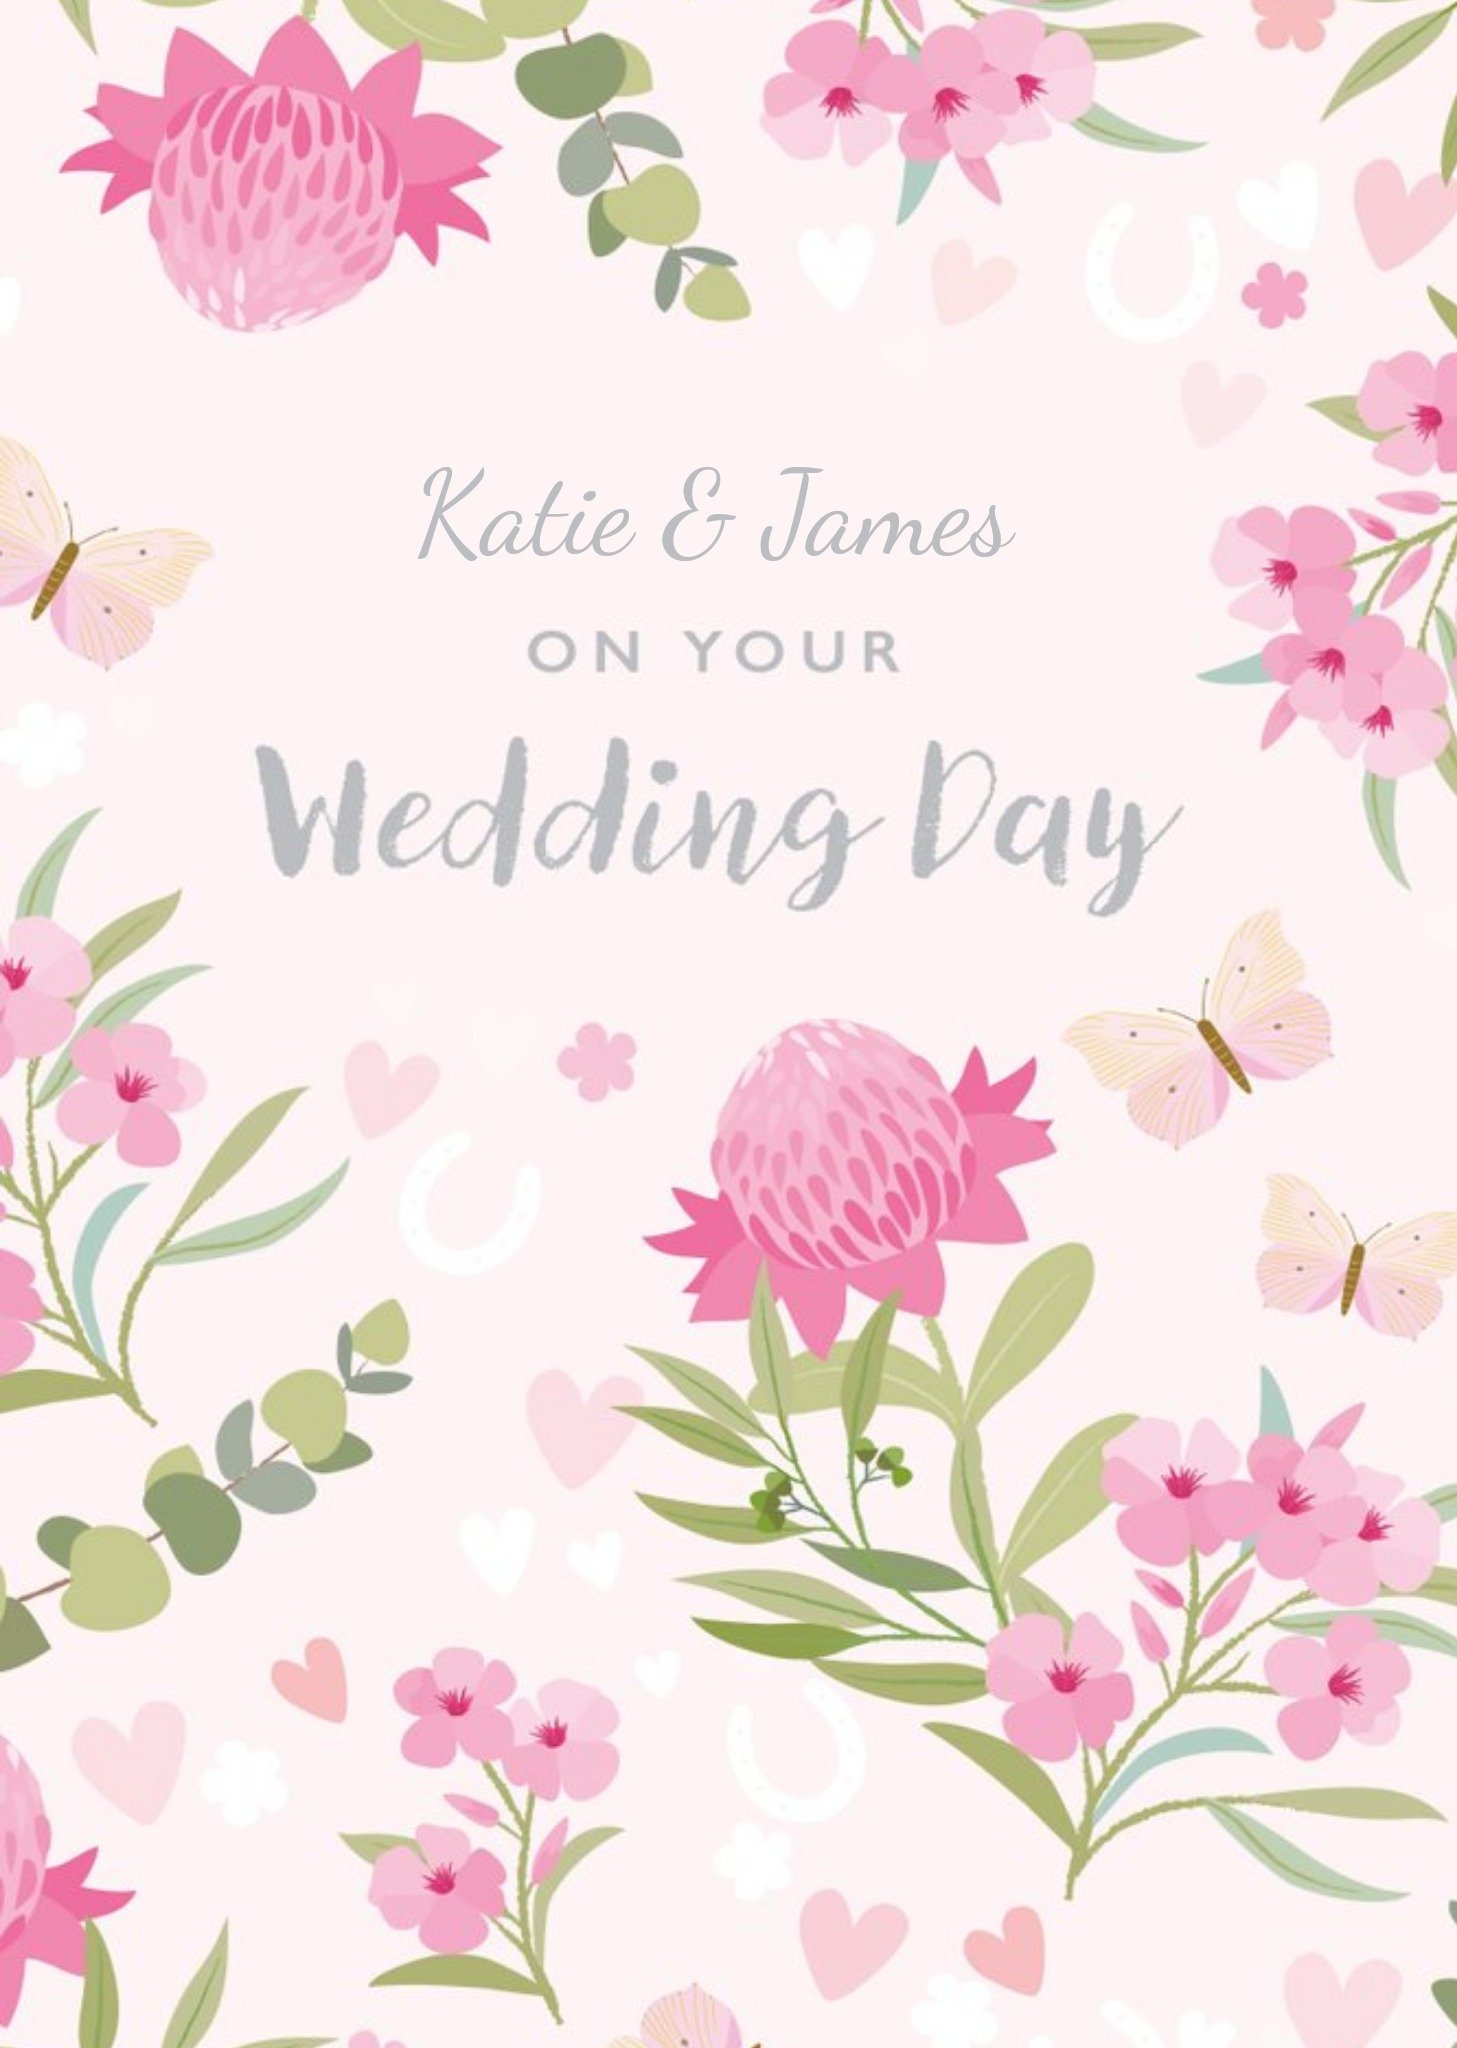 Moonpig Flowers And Butterflies Surround Text Wedding Day Card Ecard